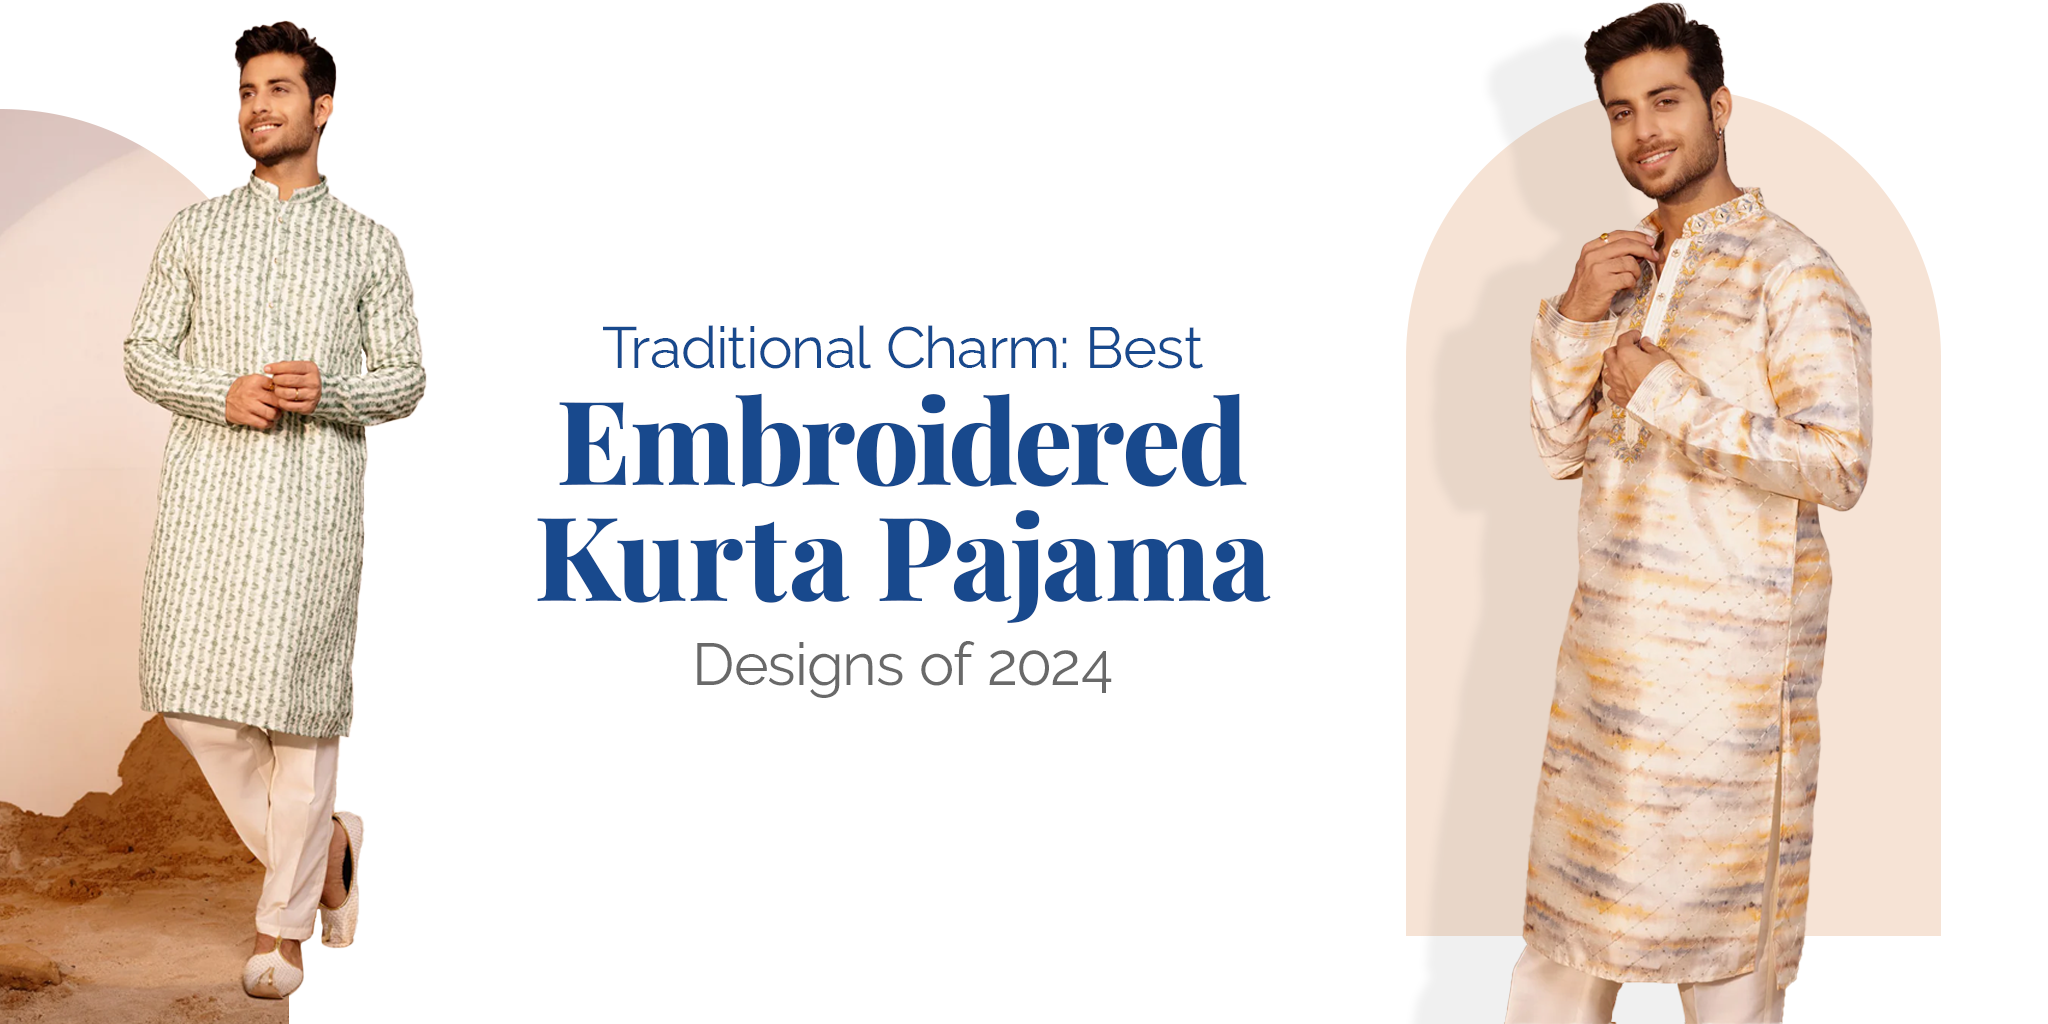 Traditional Charm: Best Embroidered Kurta Pajama Designs of 2024